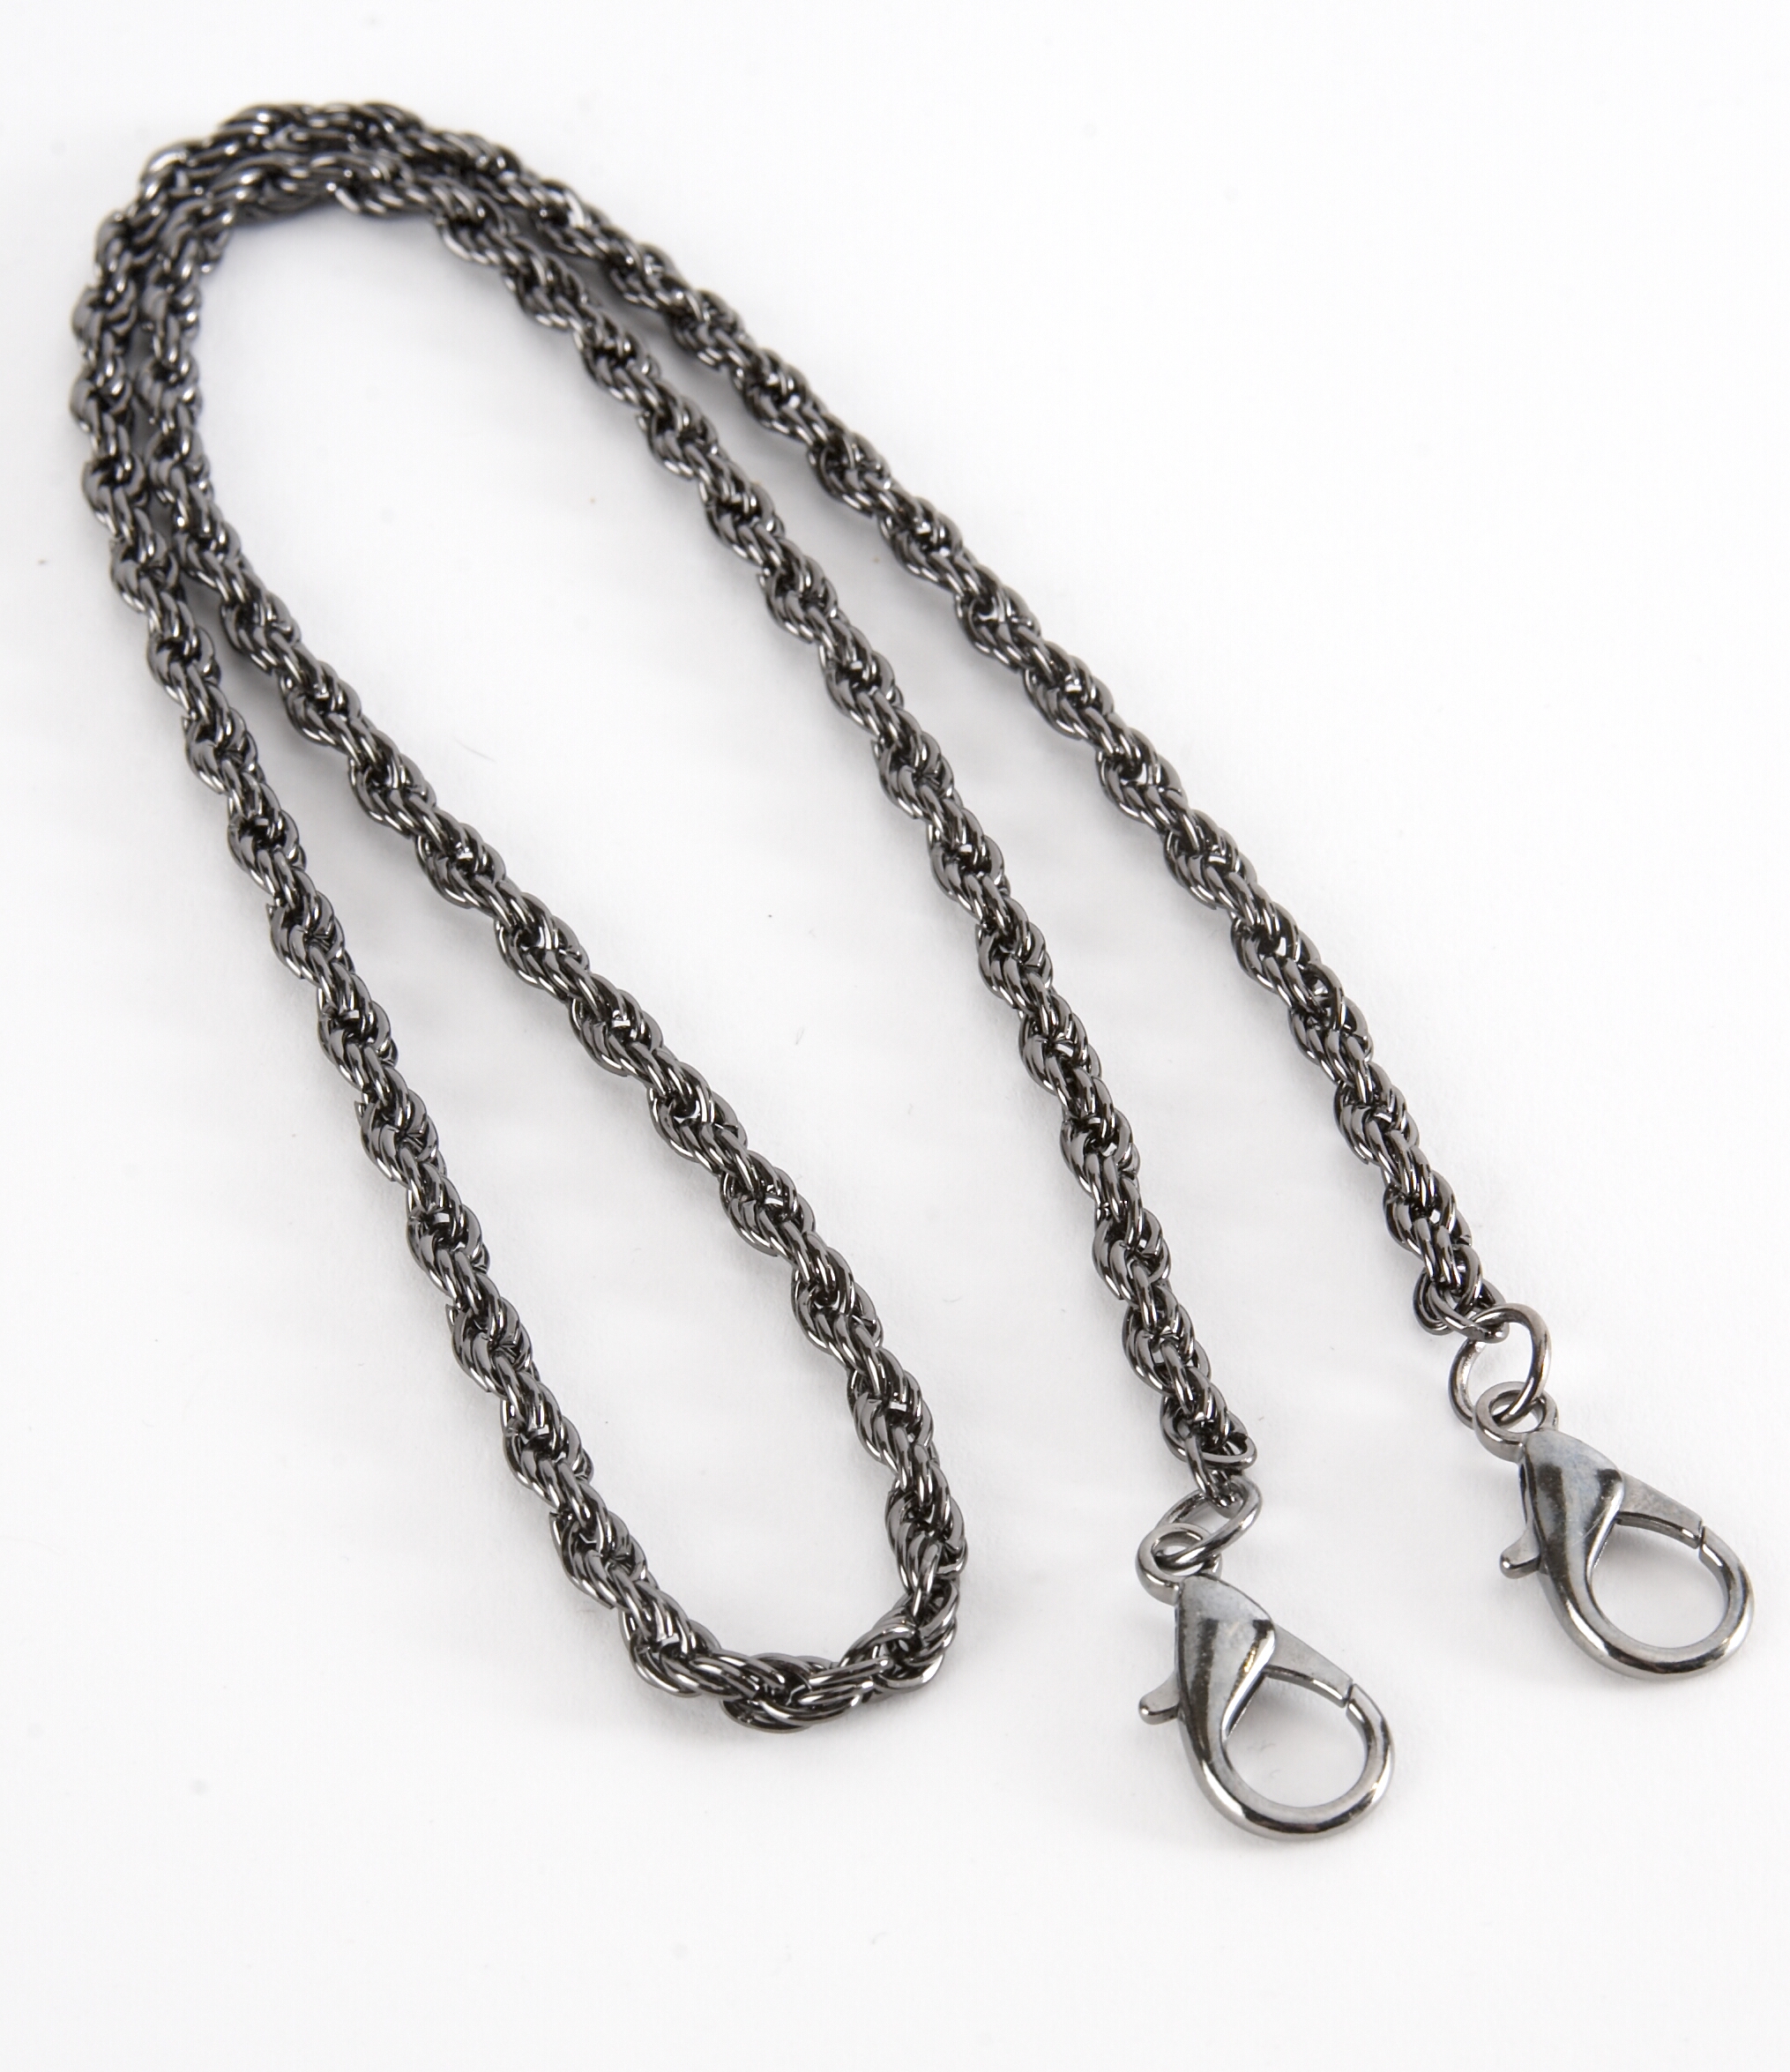 Metal Rope Chain Bag Strap - Gunmetal Grey/Black 60cm